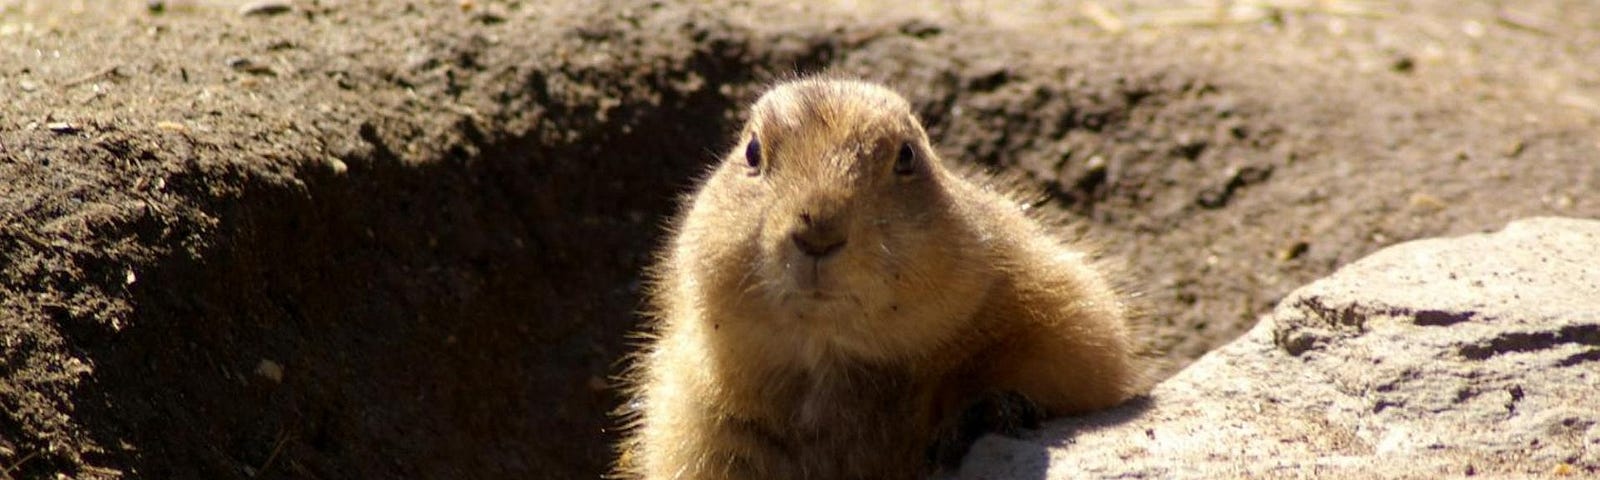 Groundhog emerging from hole